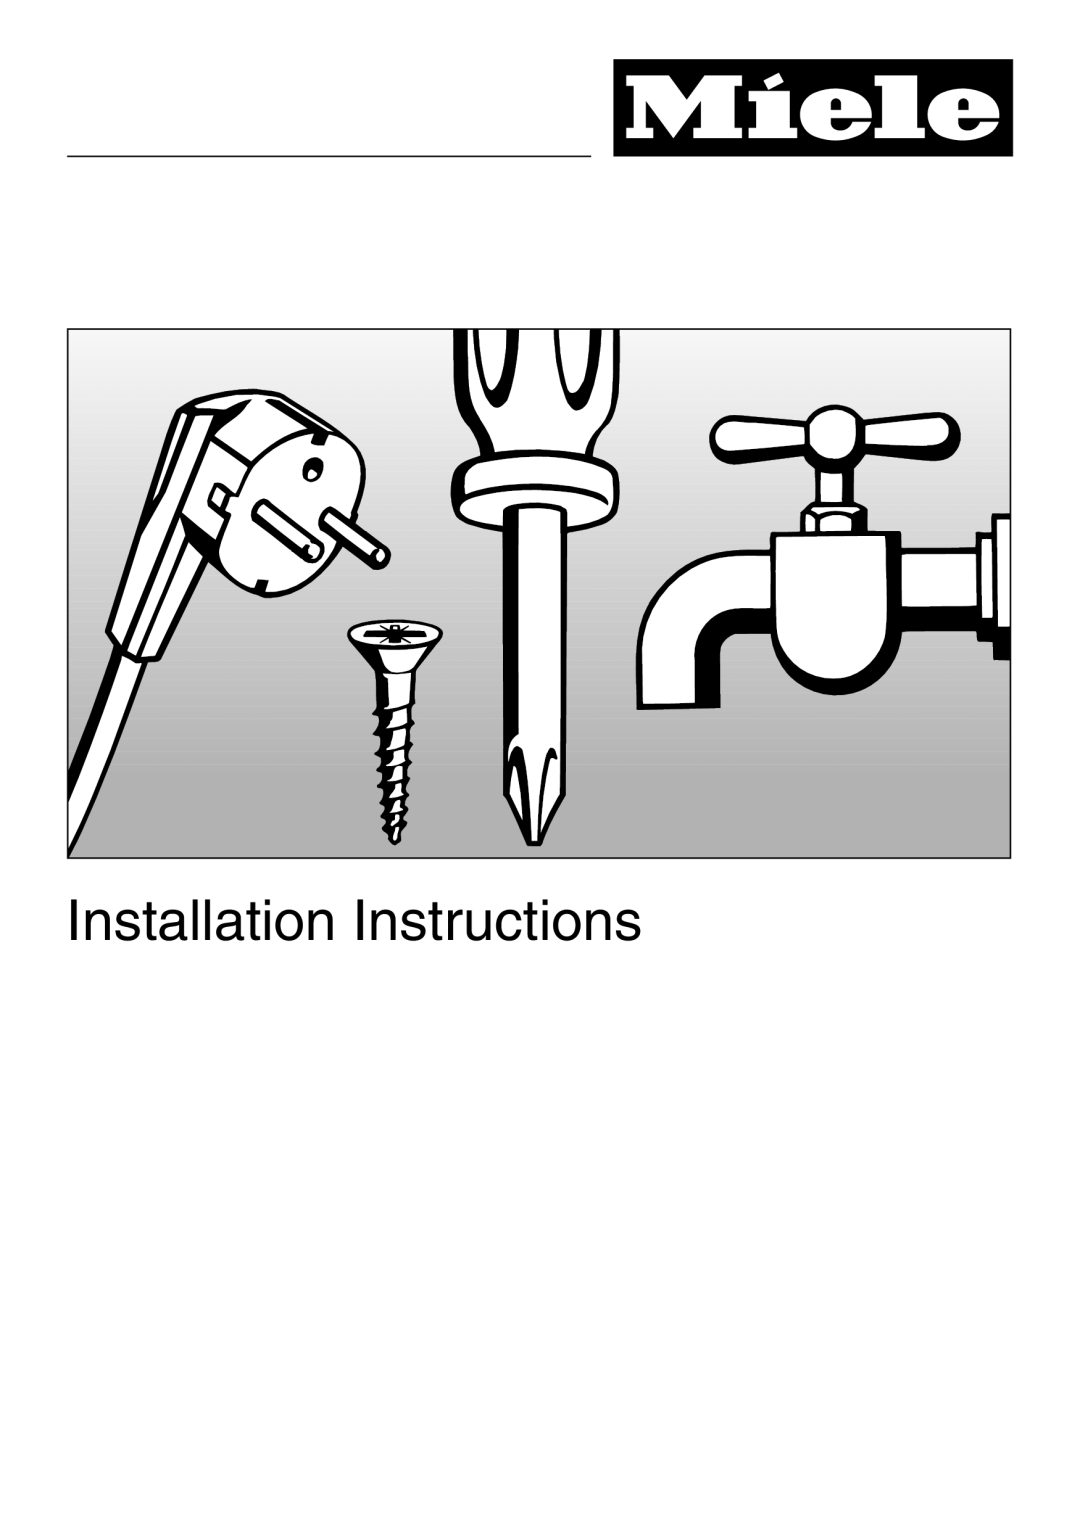 Miele DA403 installation instructions Installation Instructions 